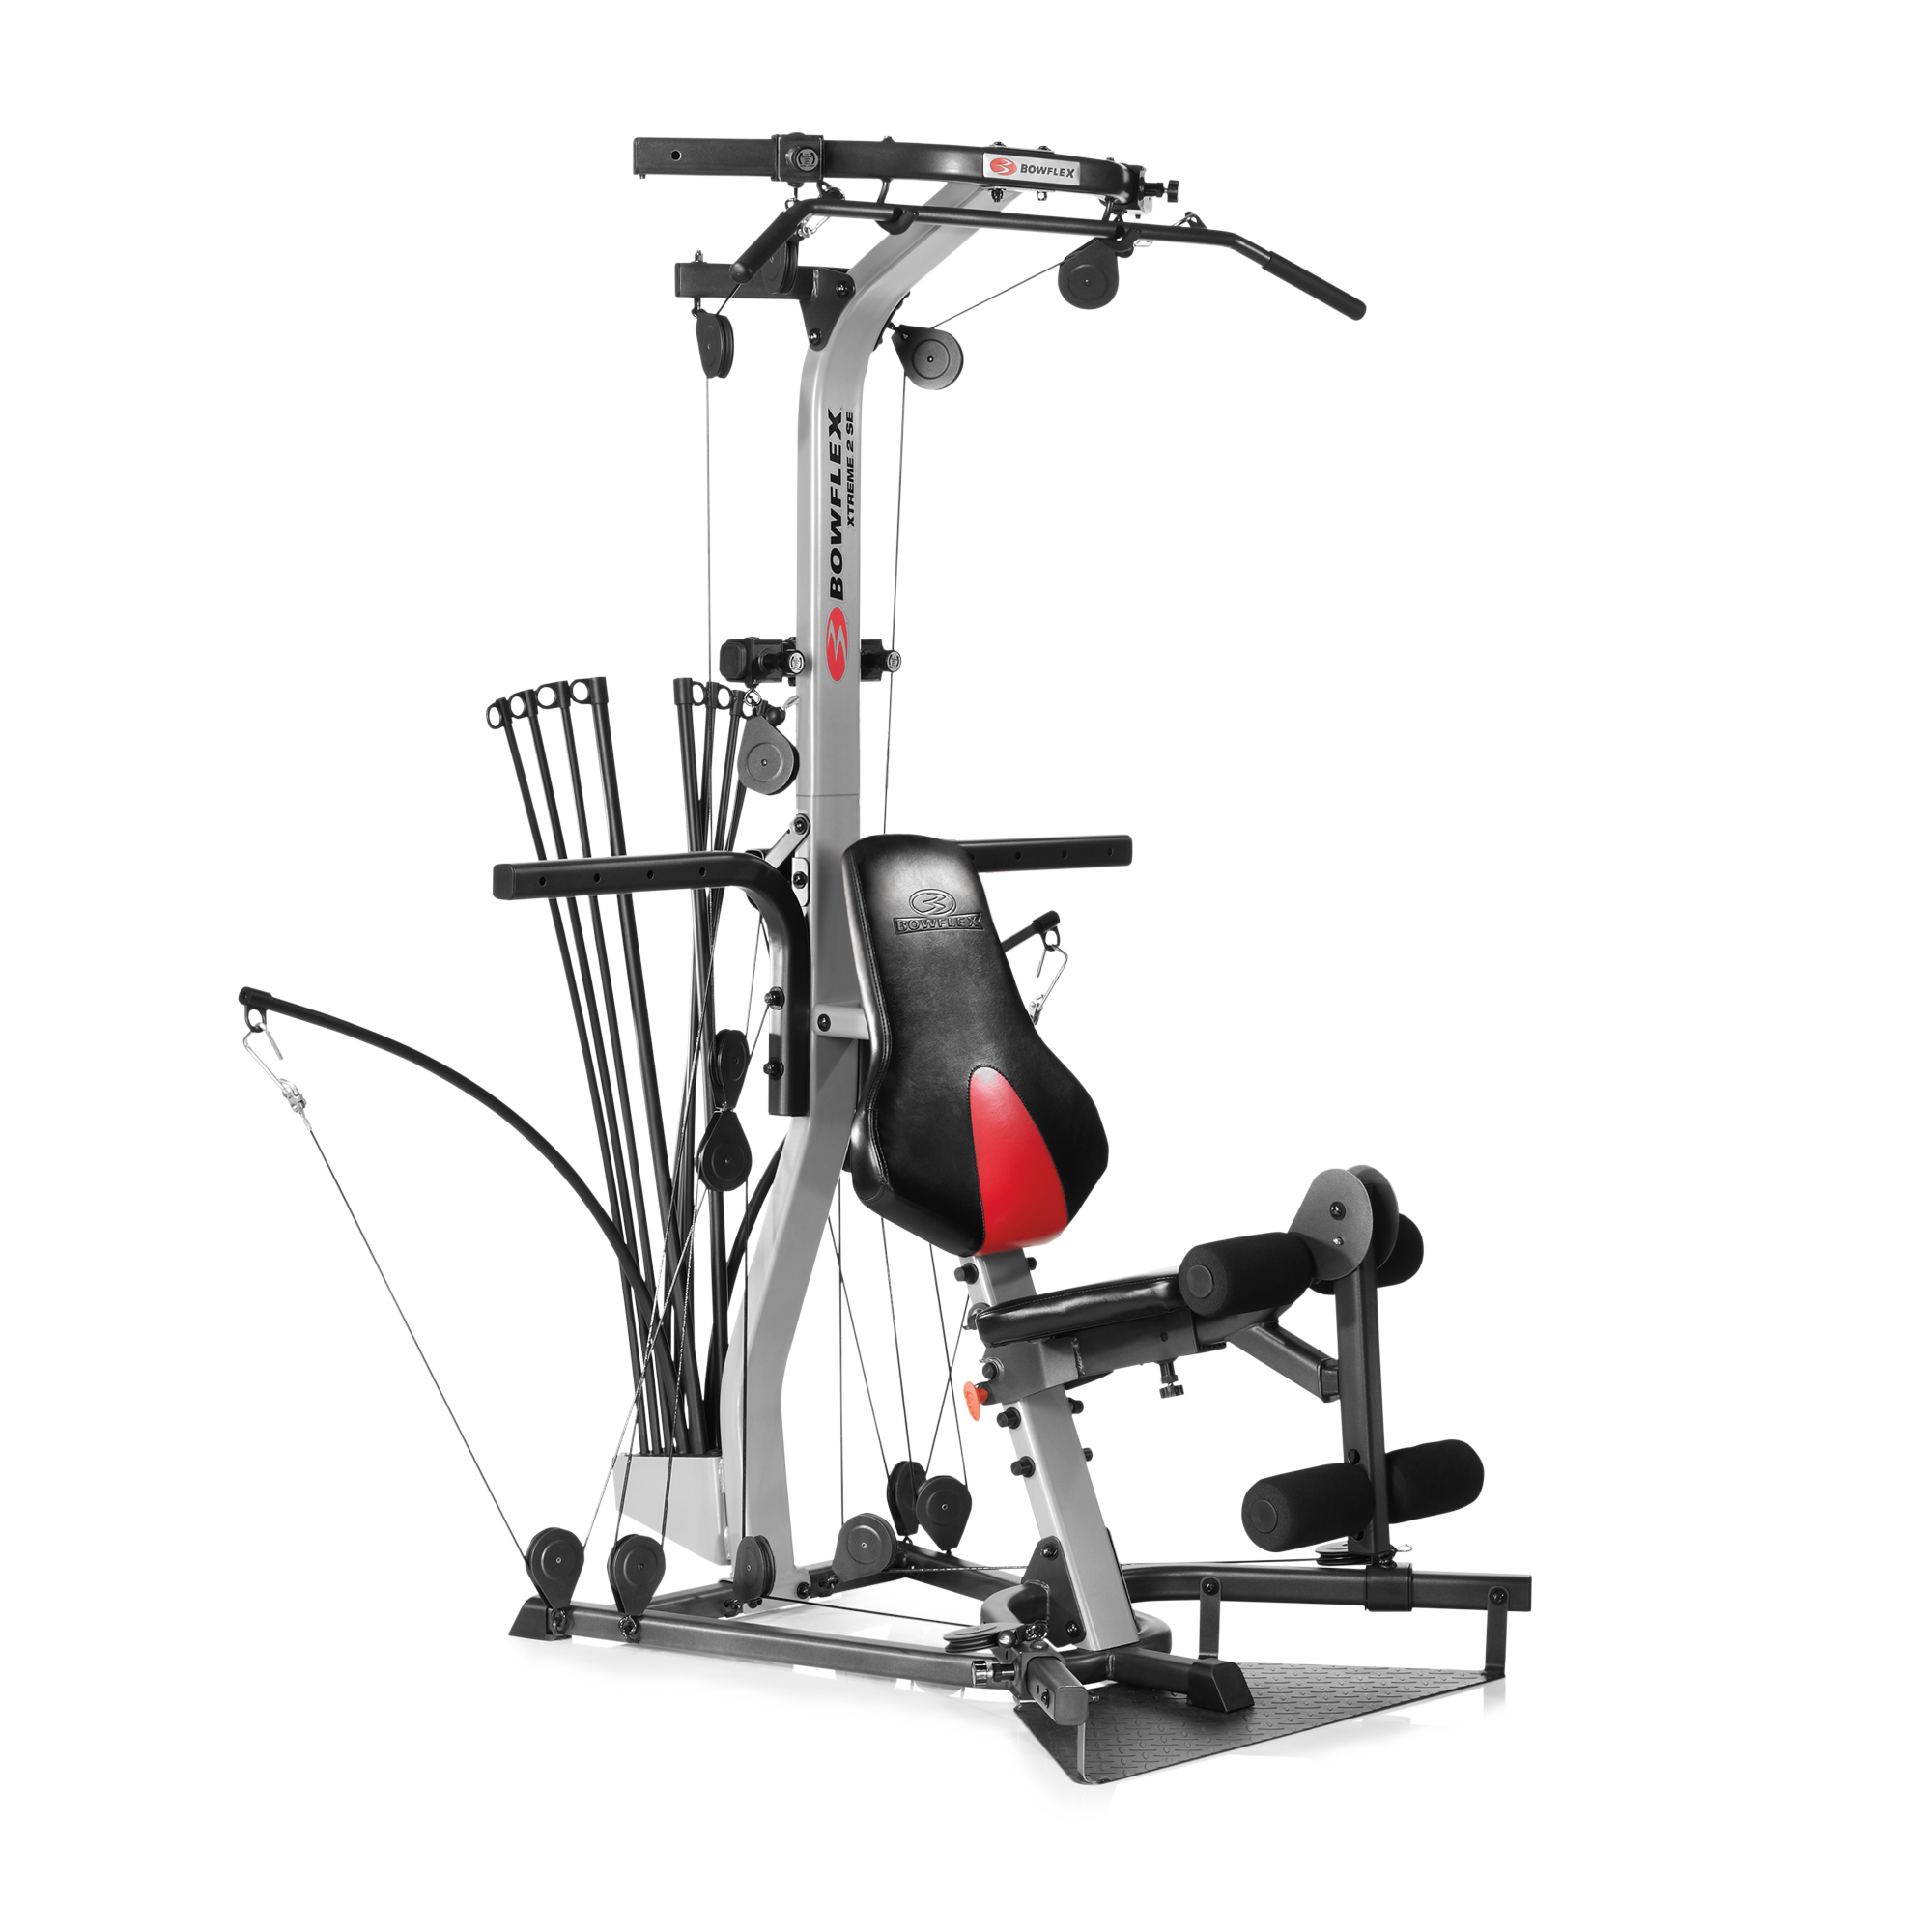 Xtreme 2 Se Home Gym Our Best Selling Power Rod Gym Bowflex [ 2000 x 2000 Pixel ]